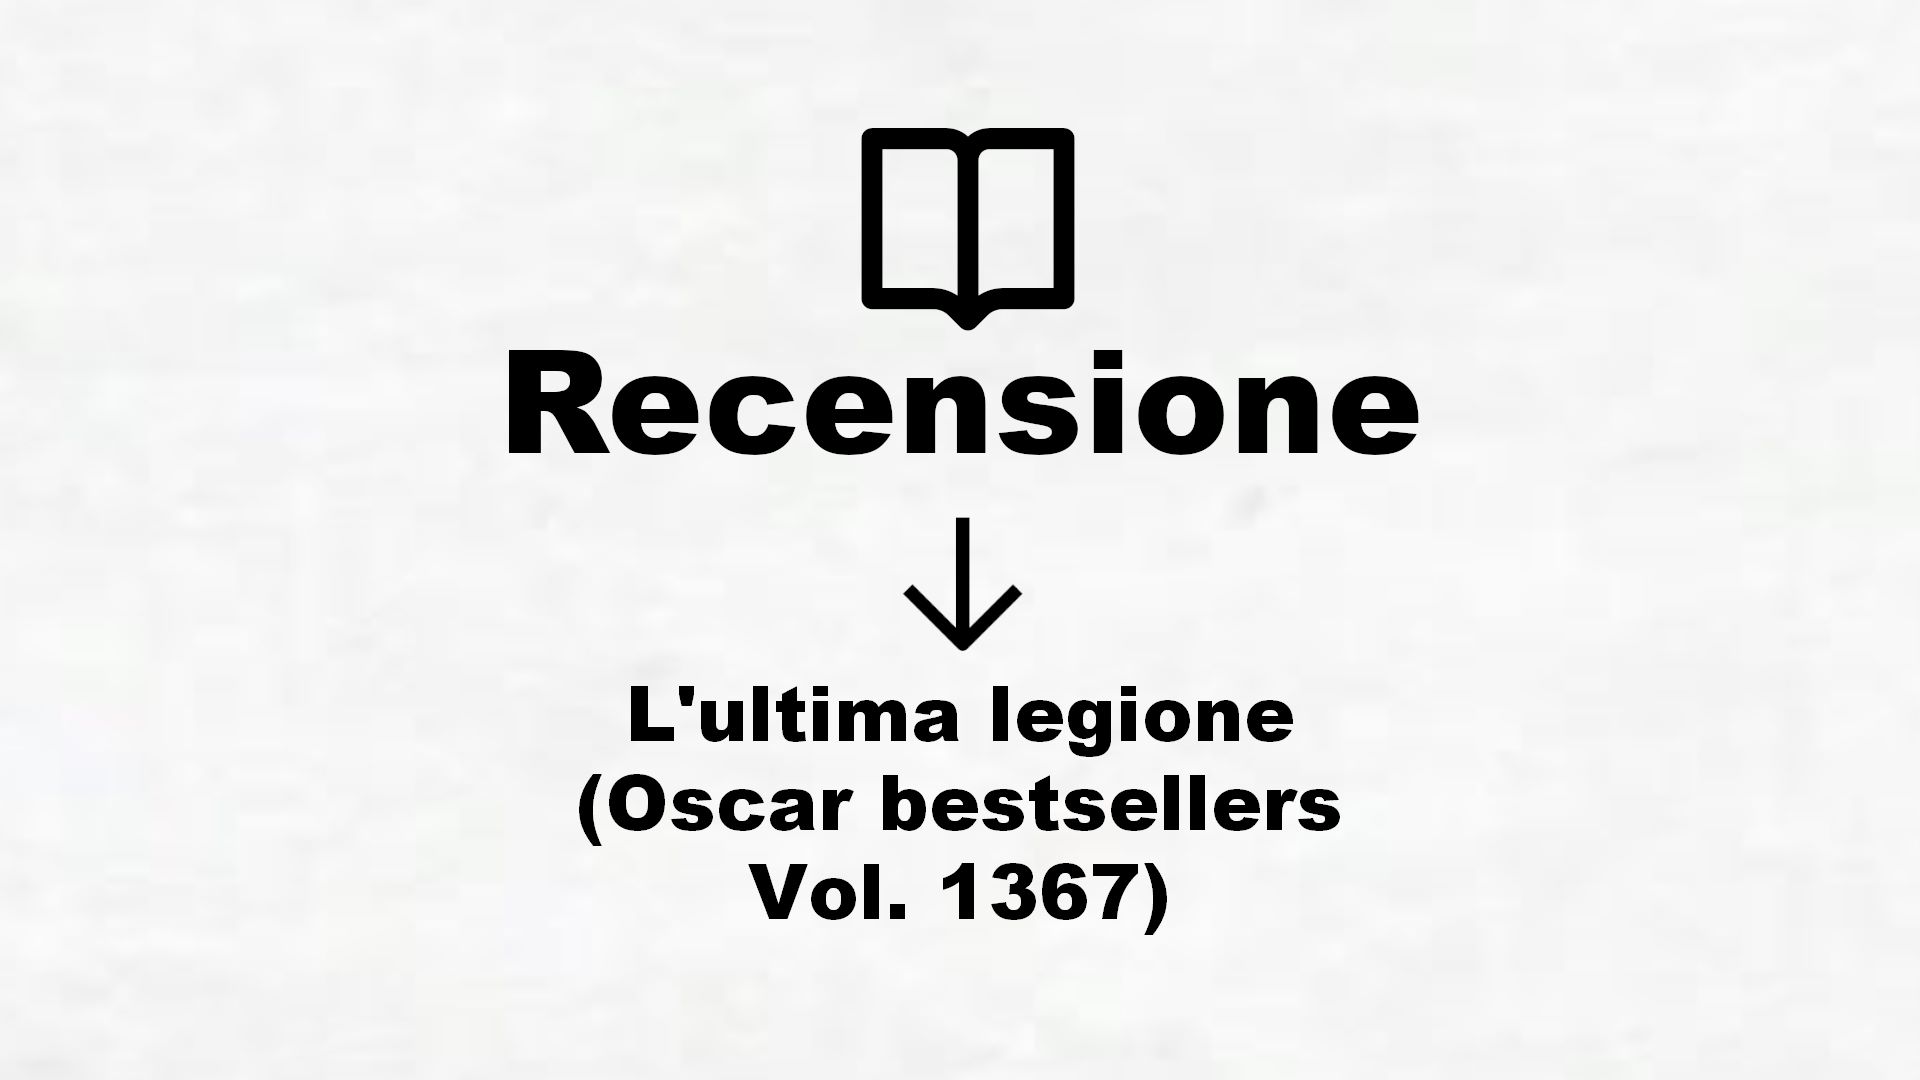 L’ultima legione (Oscar bestsellers Vol. 1367) – Recensione Libro